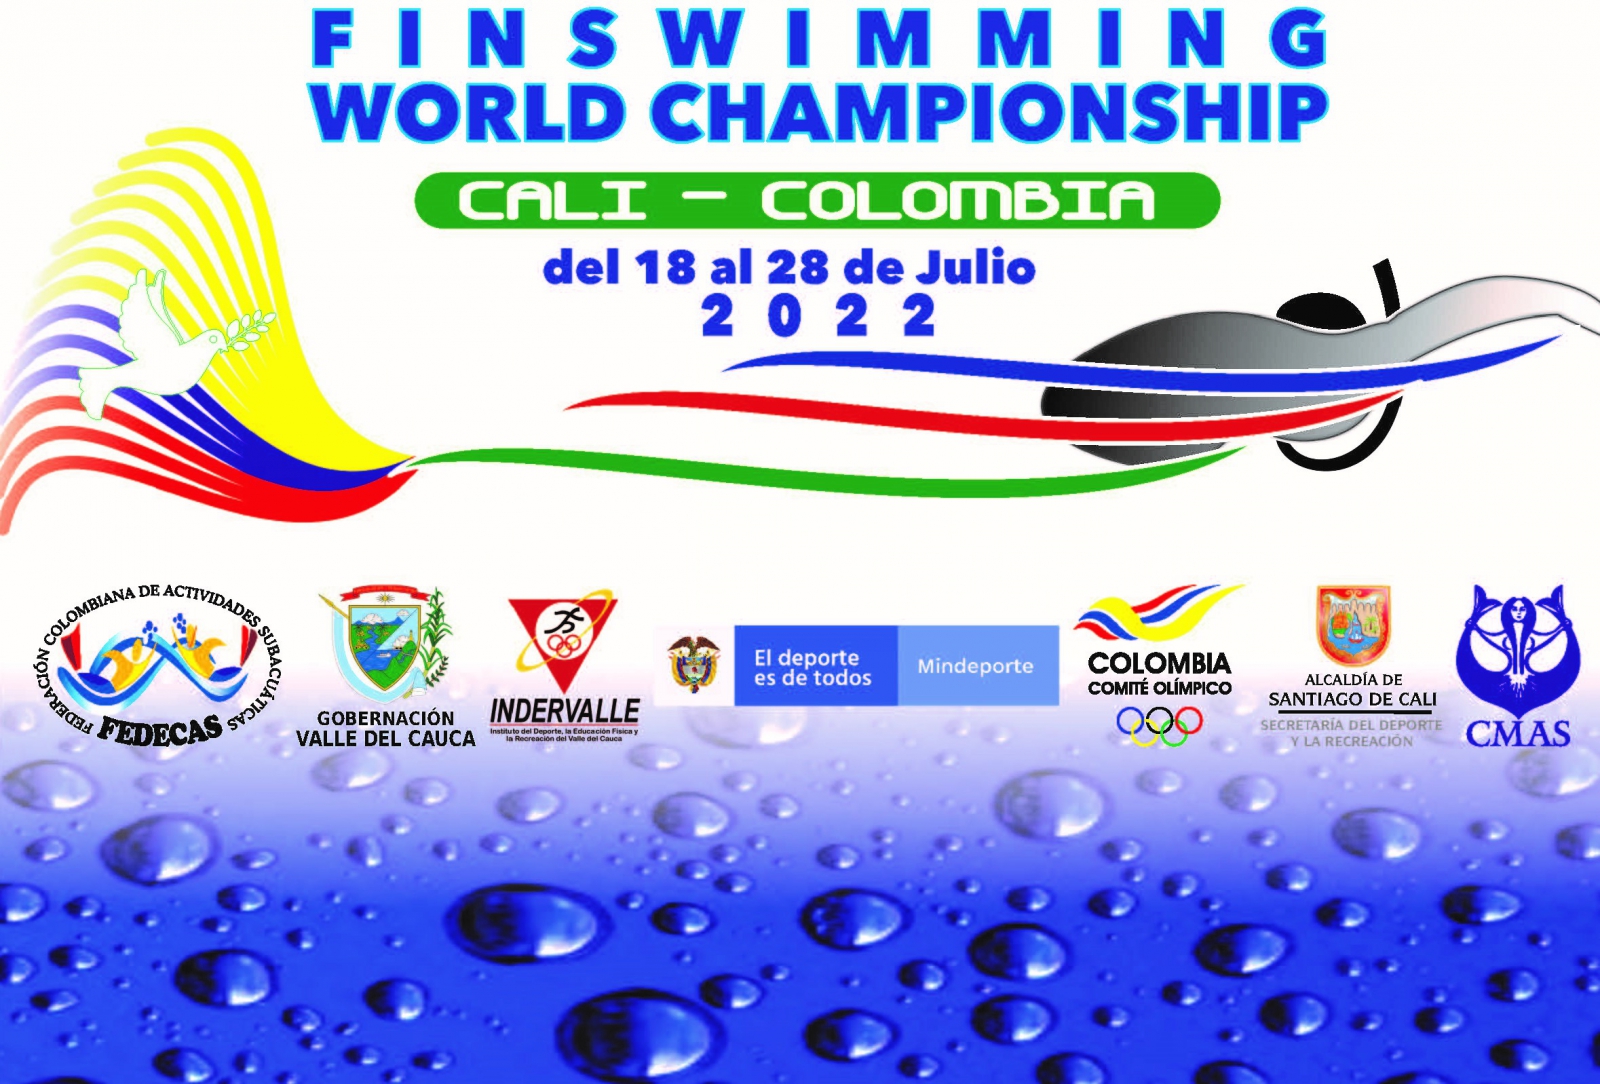 SET Online CMAS 22nd World Finswimming Championships